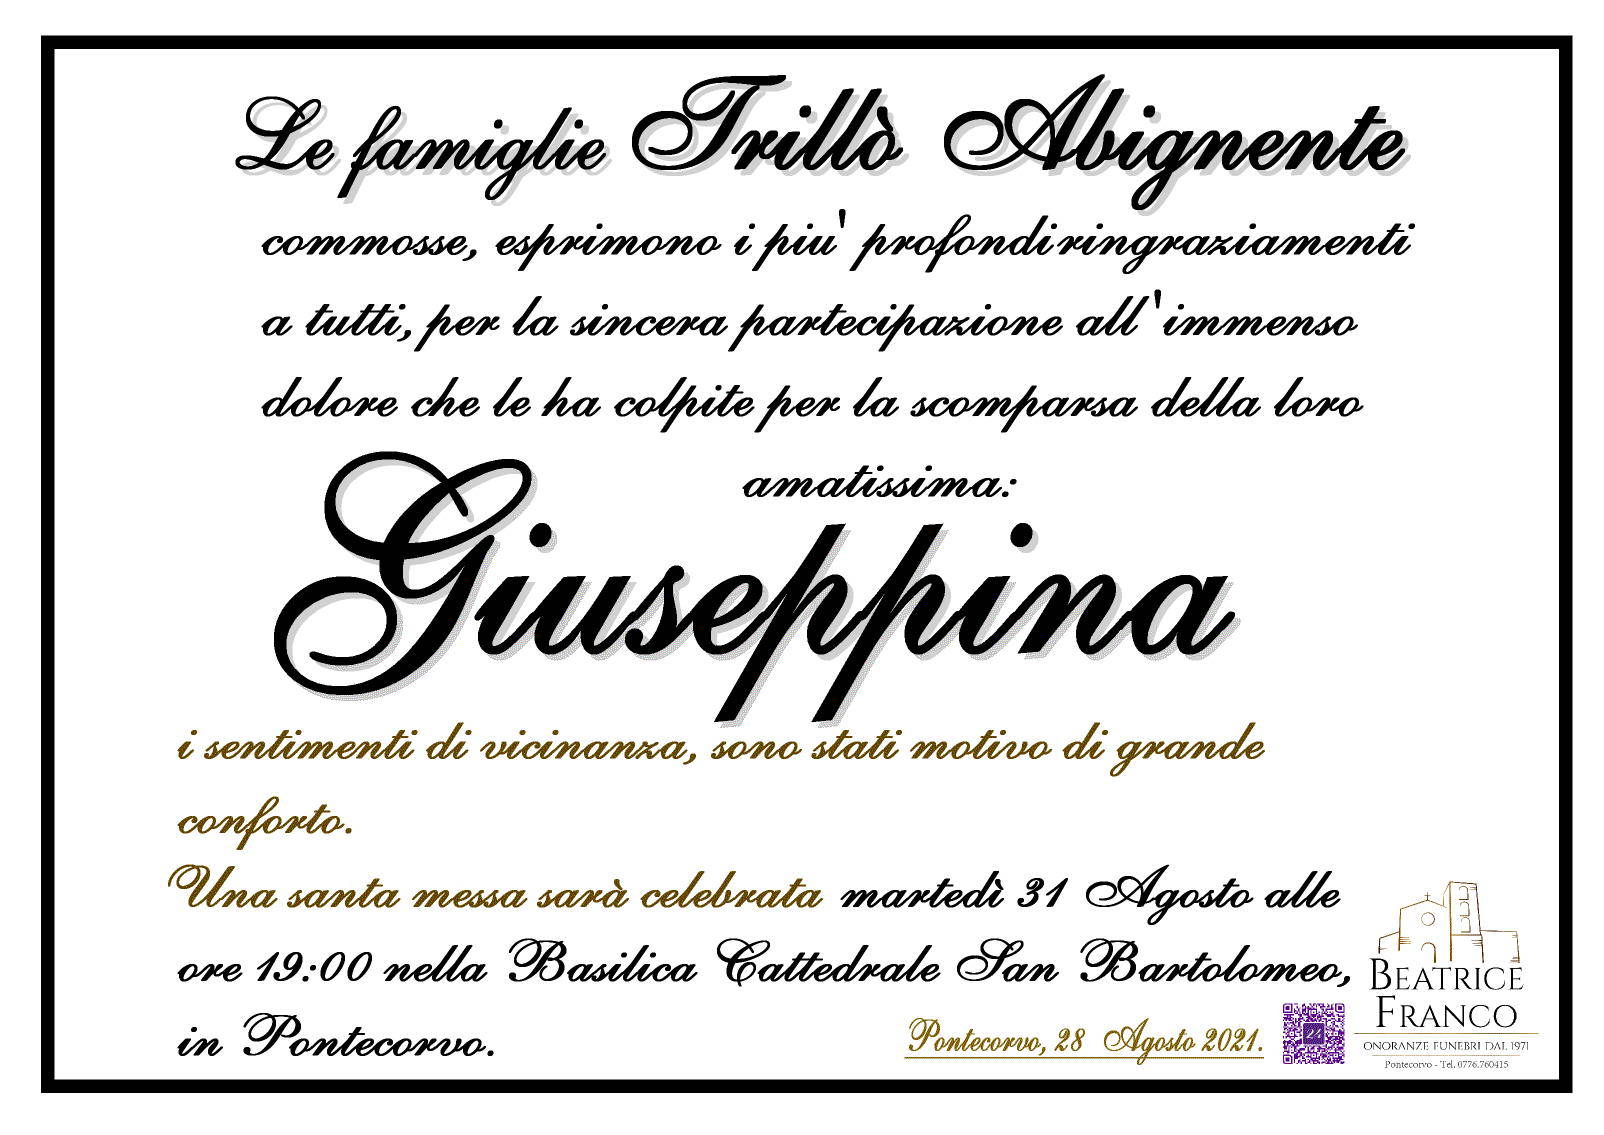 Giuseppina Abignente